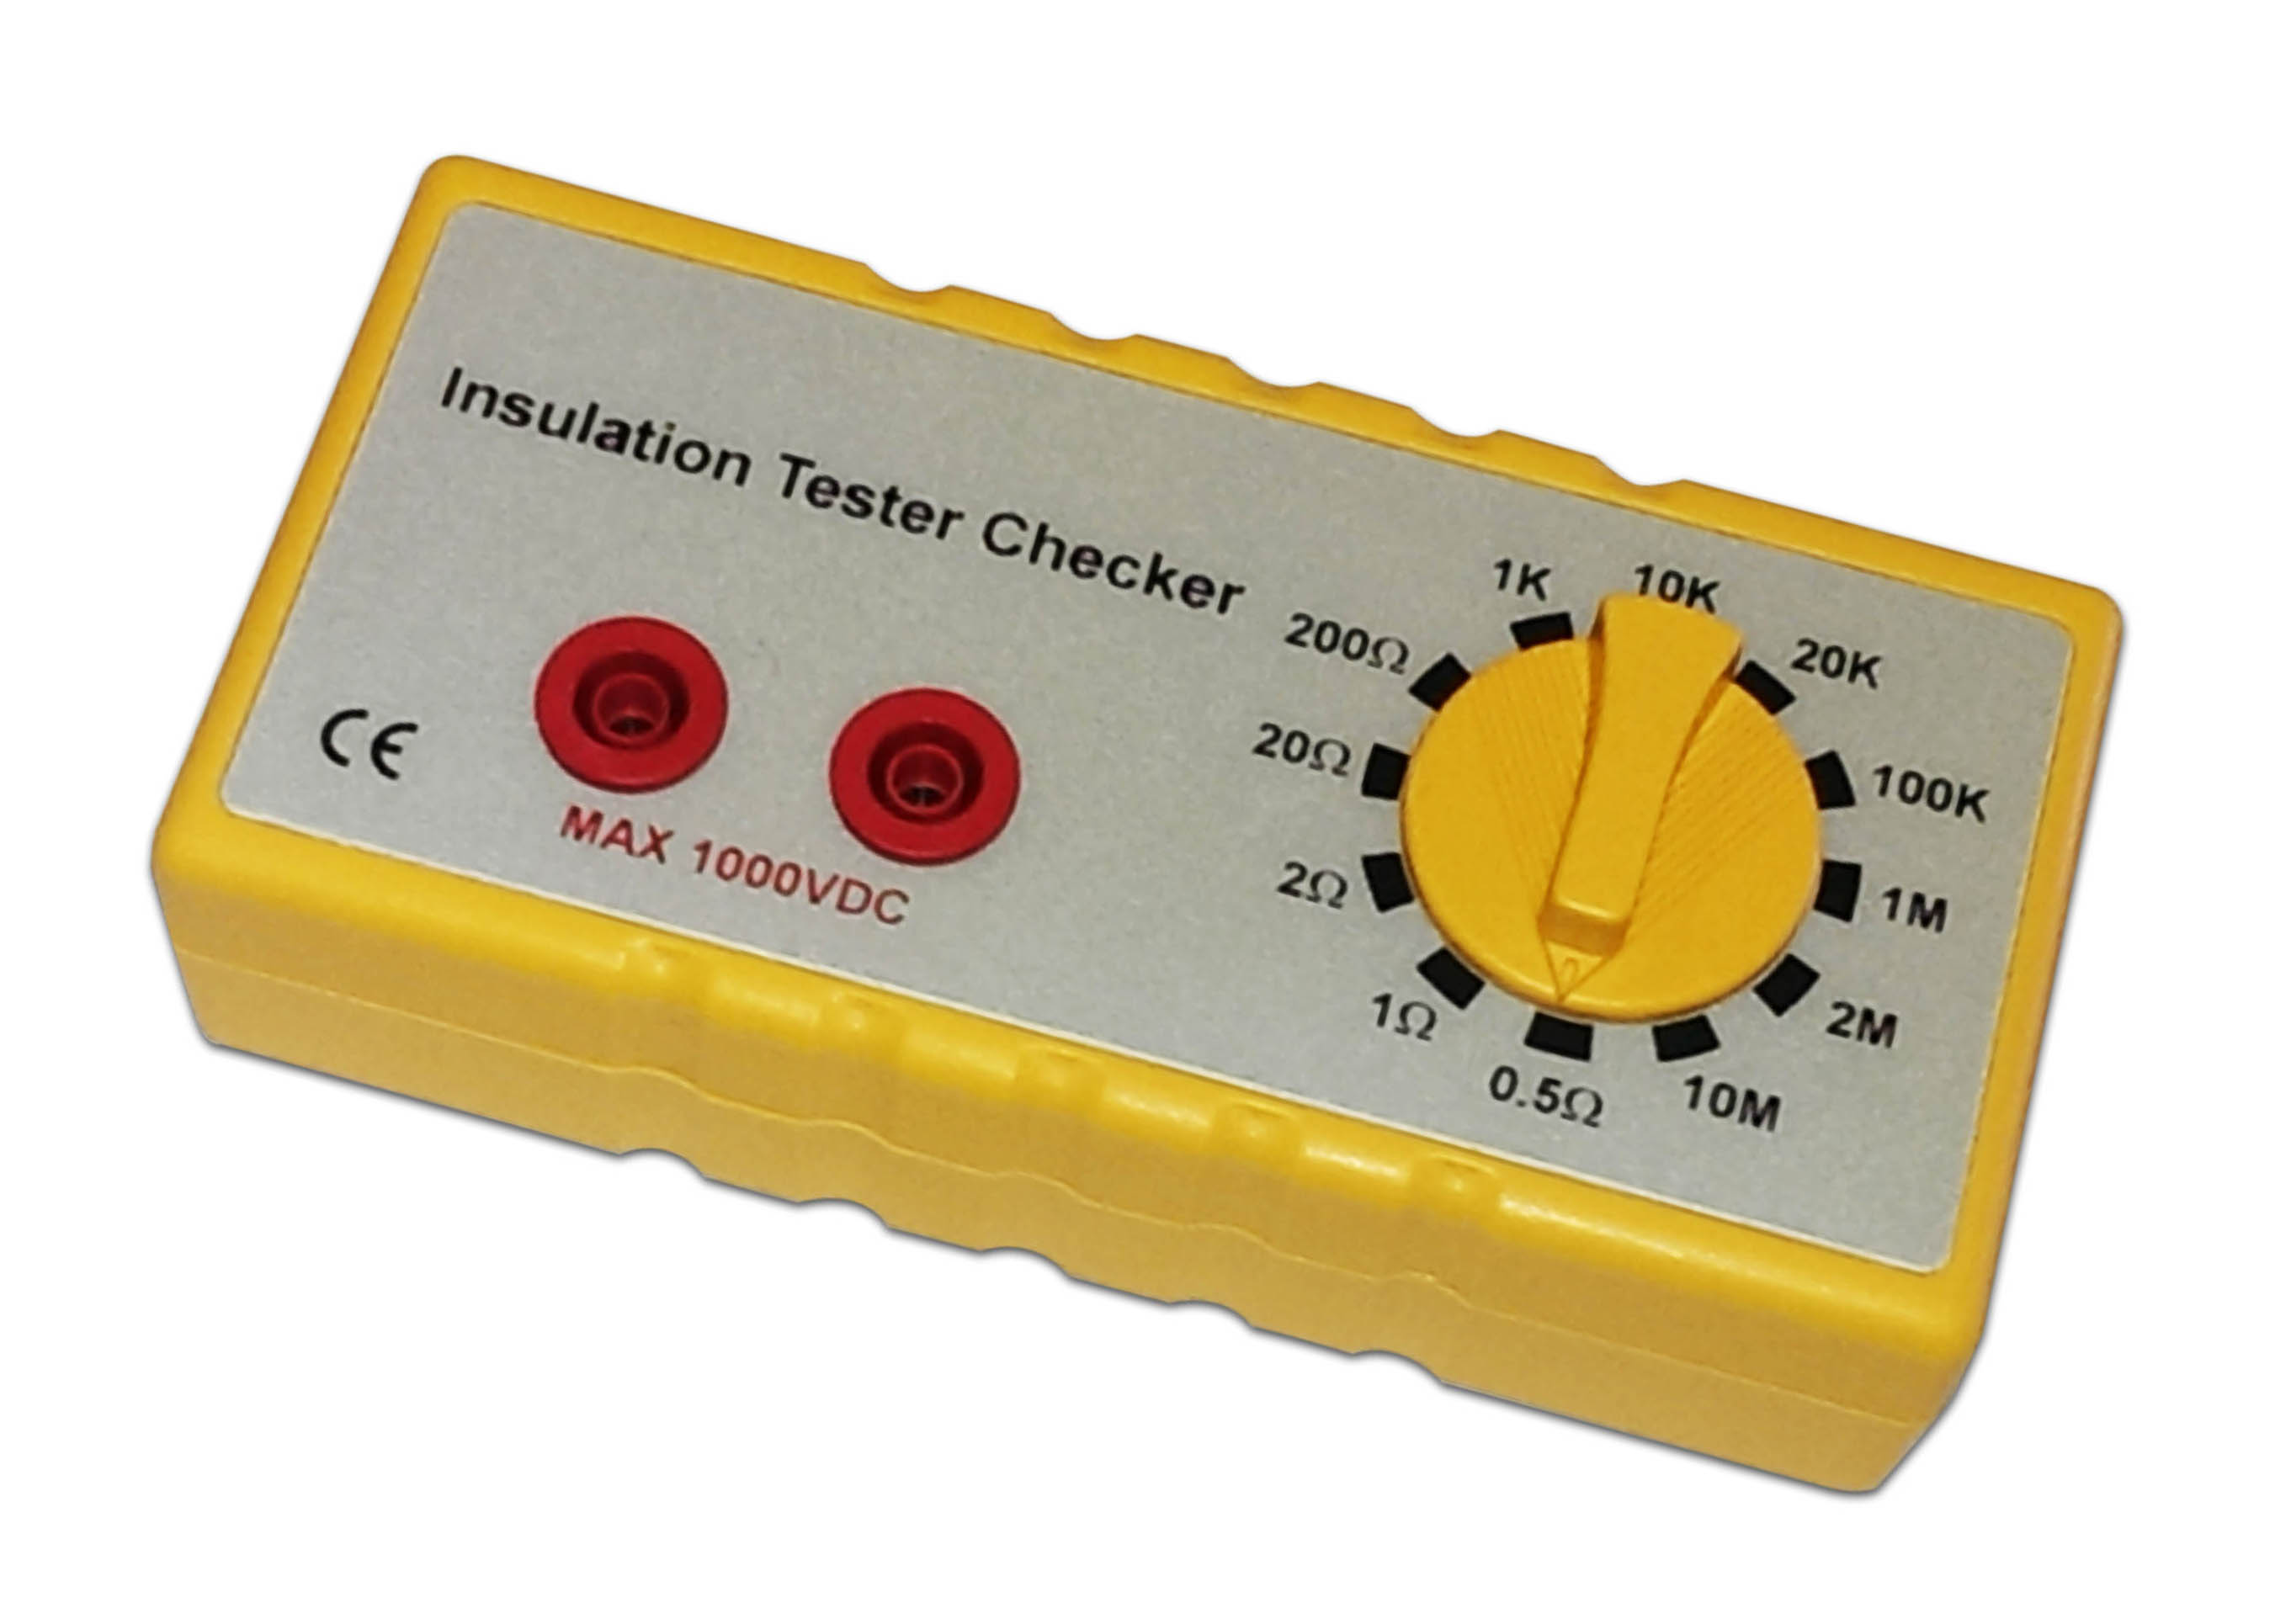 ITC8 (Insulation Tester Checker)